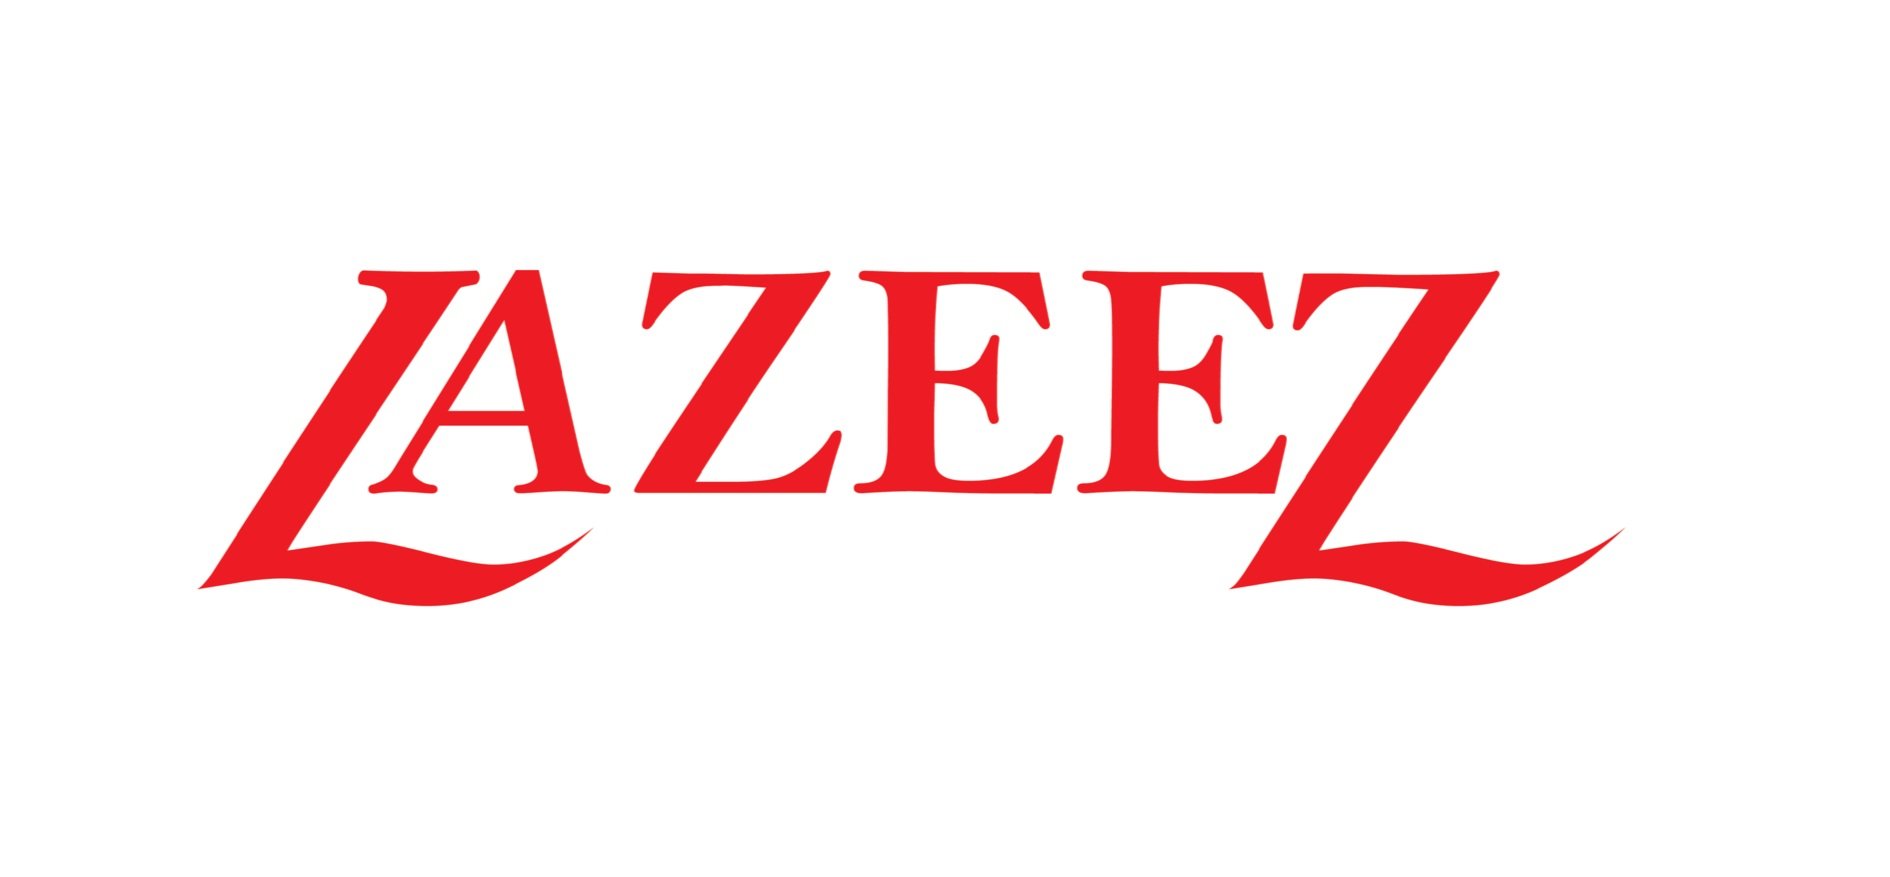 lazzez-logo-white-Smaller+sized.jpg